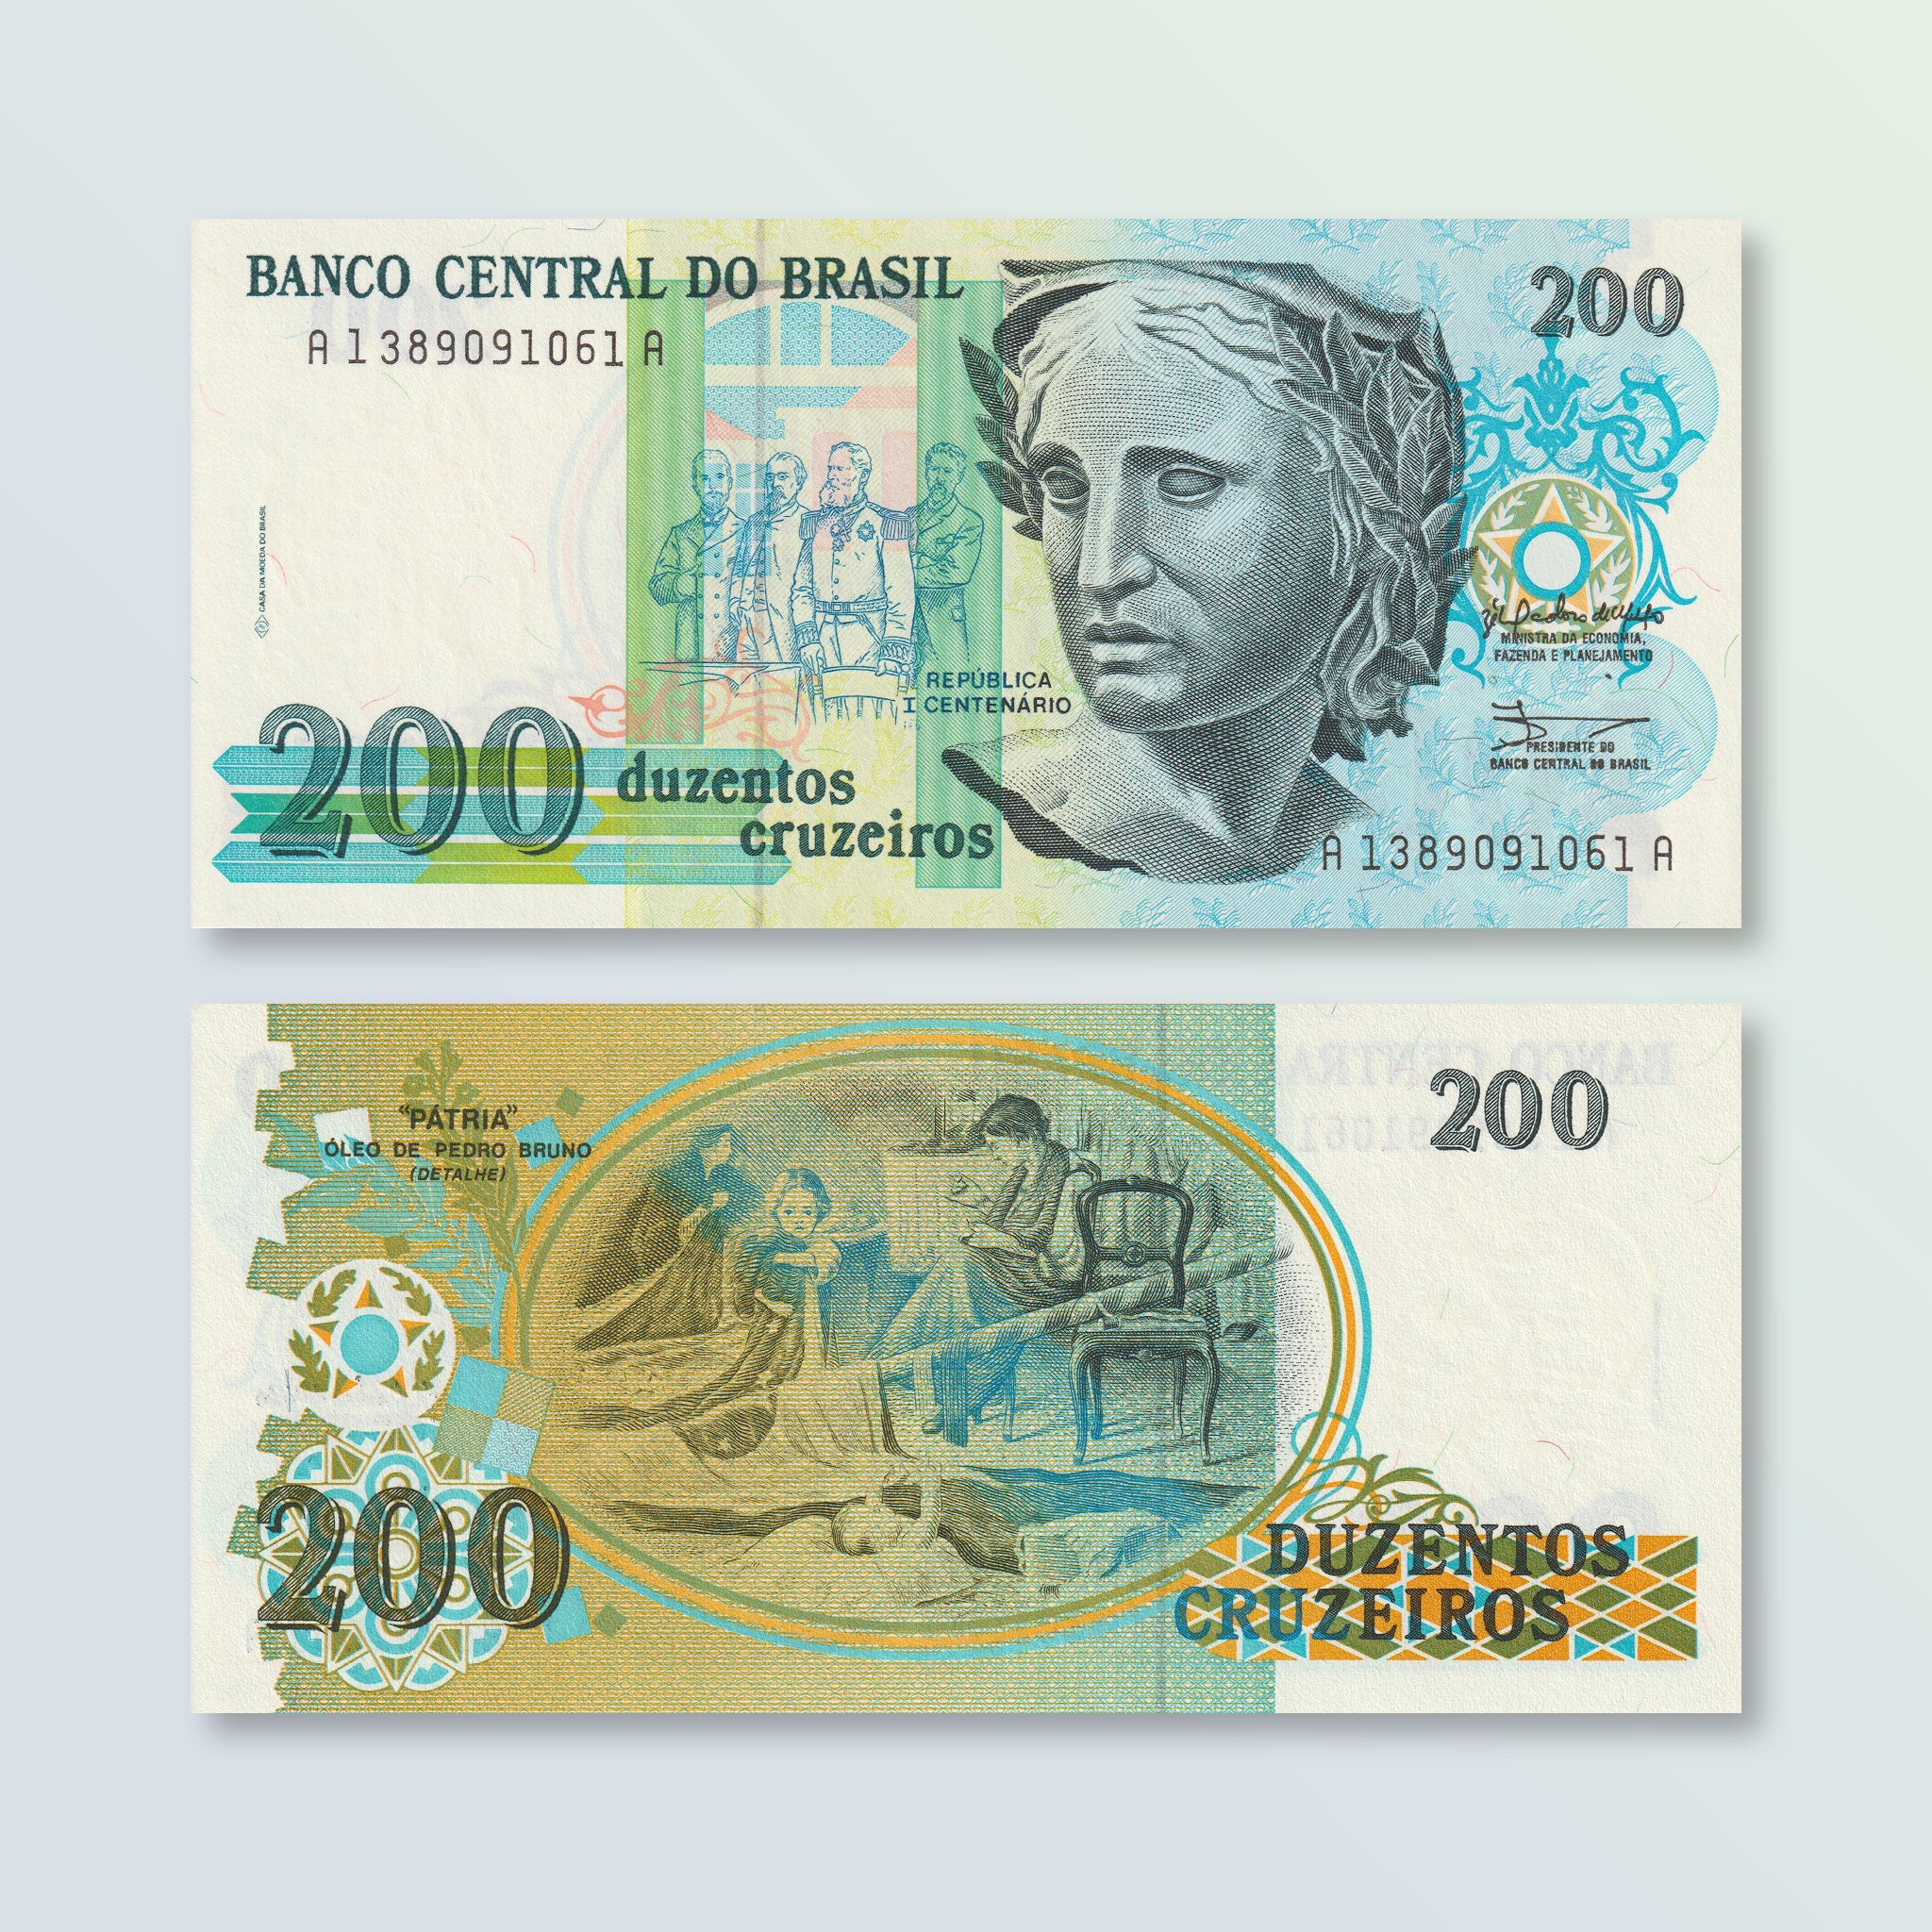 Brazil 200 Cruzeiros, 1990, B851a, P229, UNC - Robert's World Money - World Banknotes